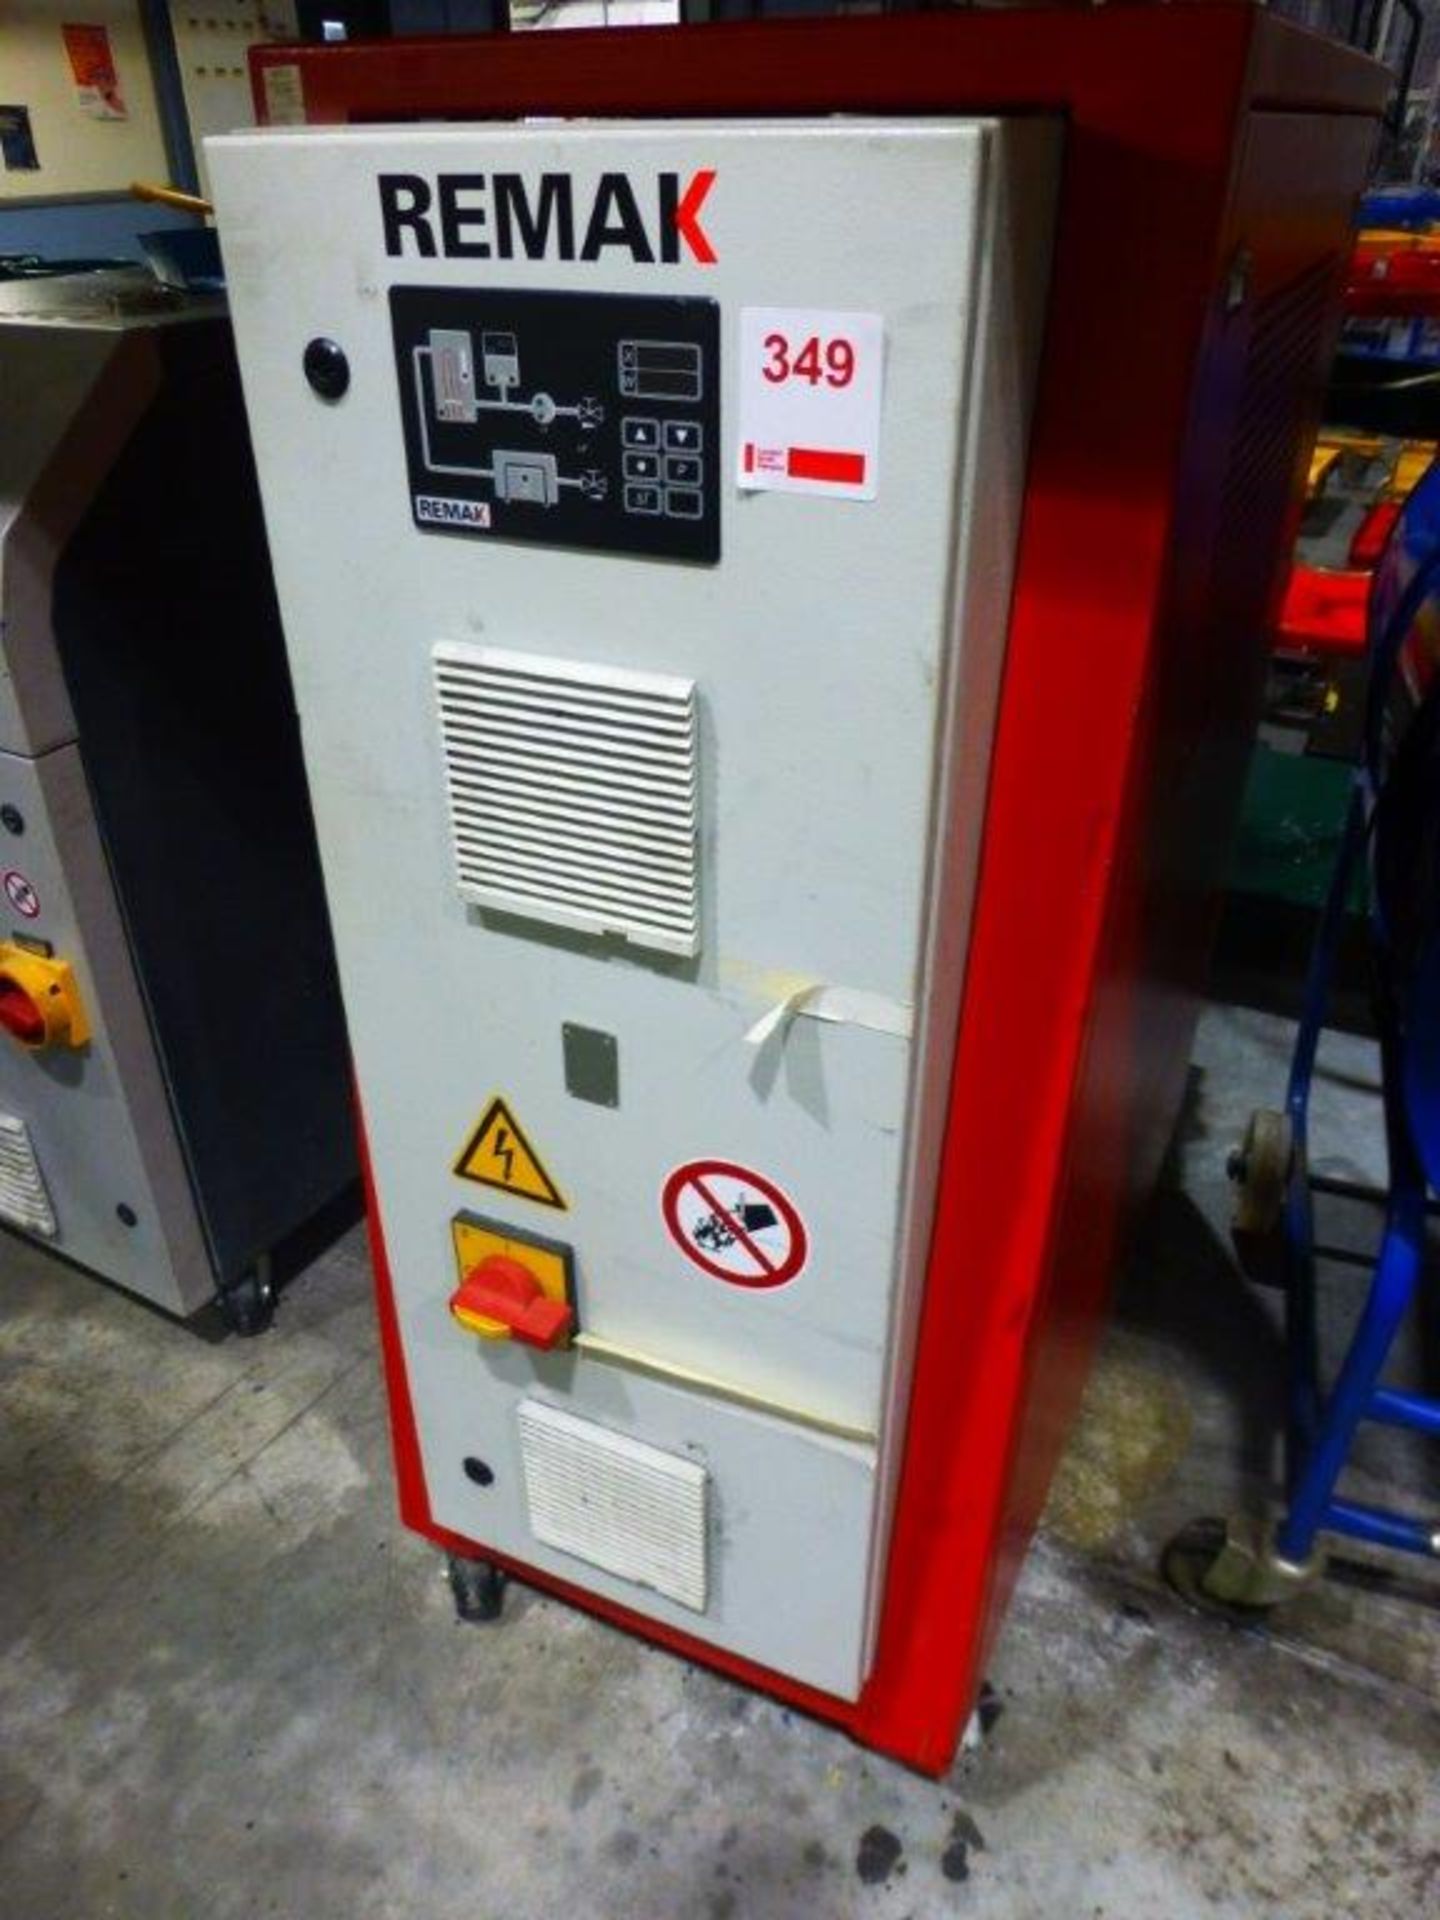 Remak TRW95/EWR 30.0 temperature control unit, serial No 404700.10.000/02 (A Risk Assessment and - Image 2 of 3